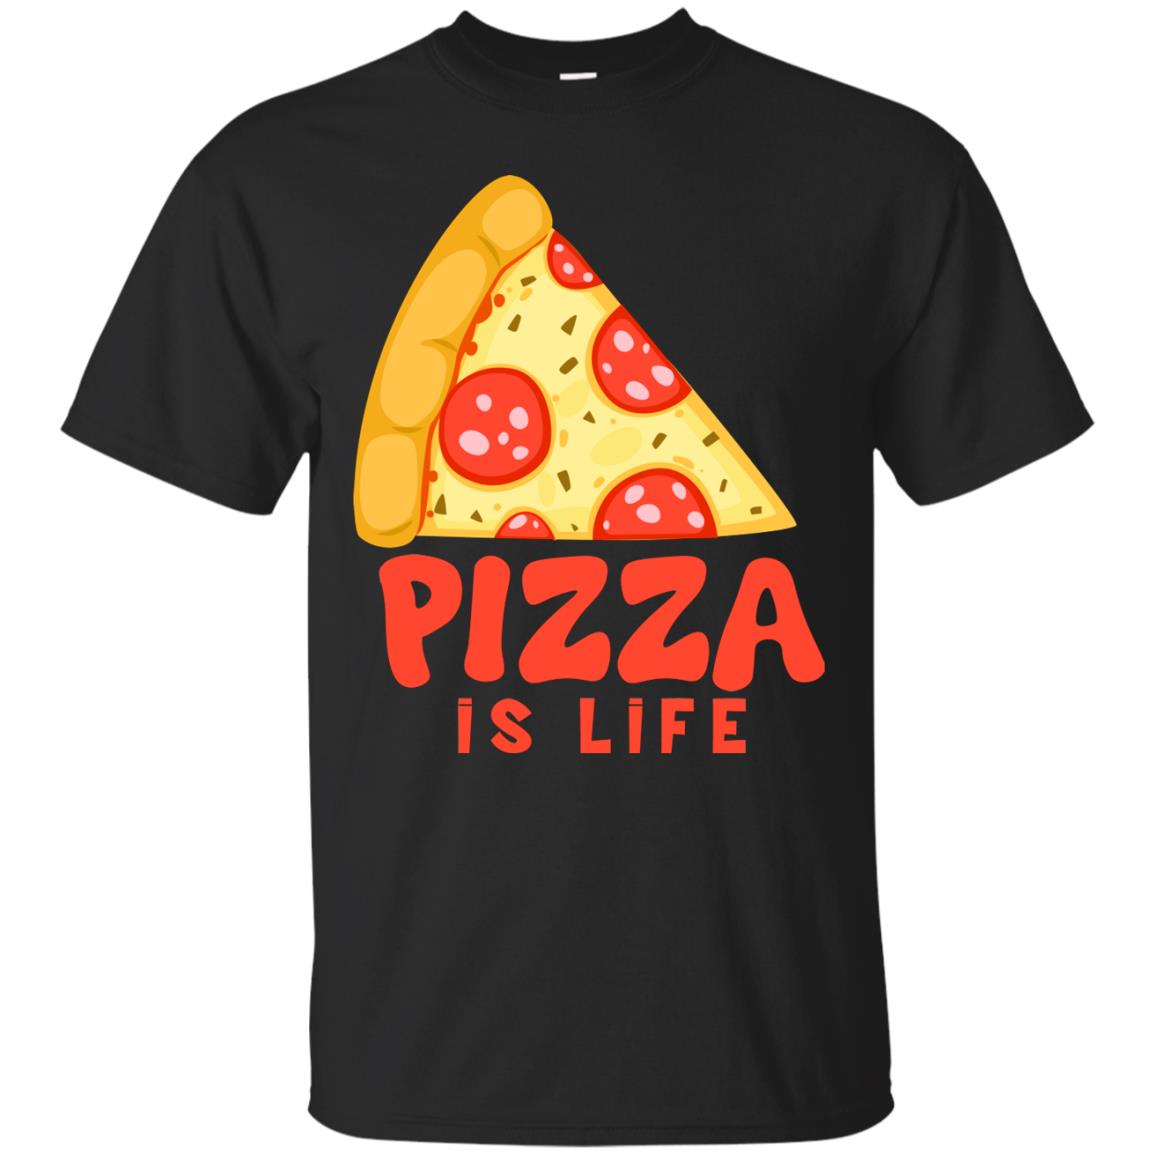 Pizza Is Life Shirt For Pizza LoversG200 Gildan Ultra Cotton T-Shirt